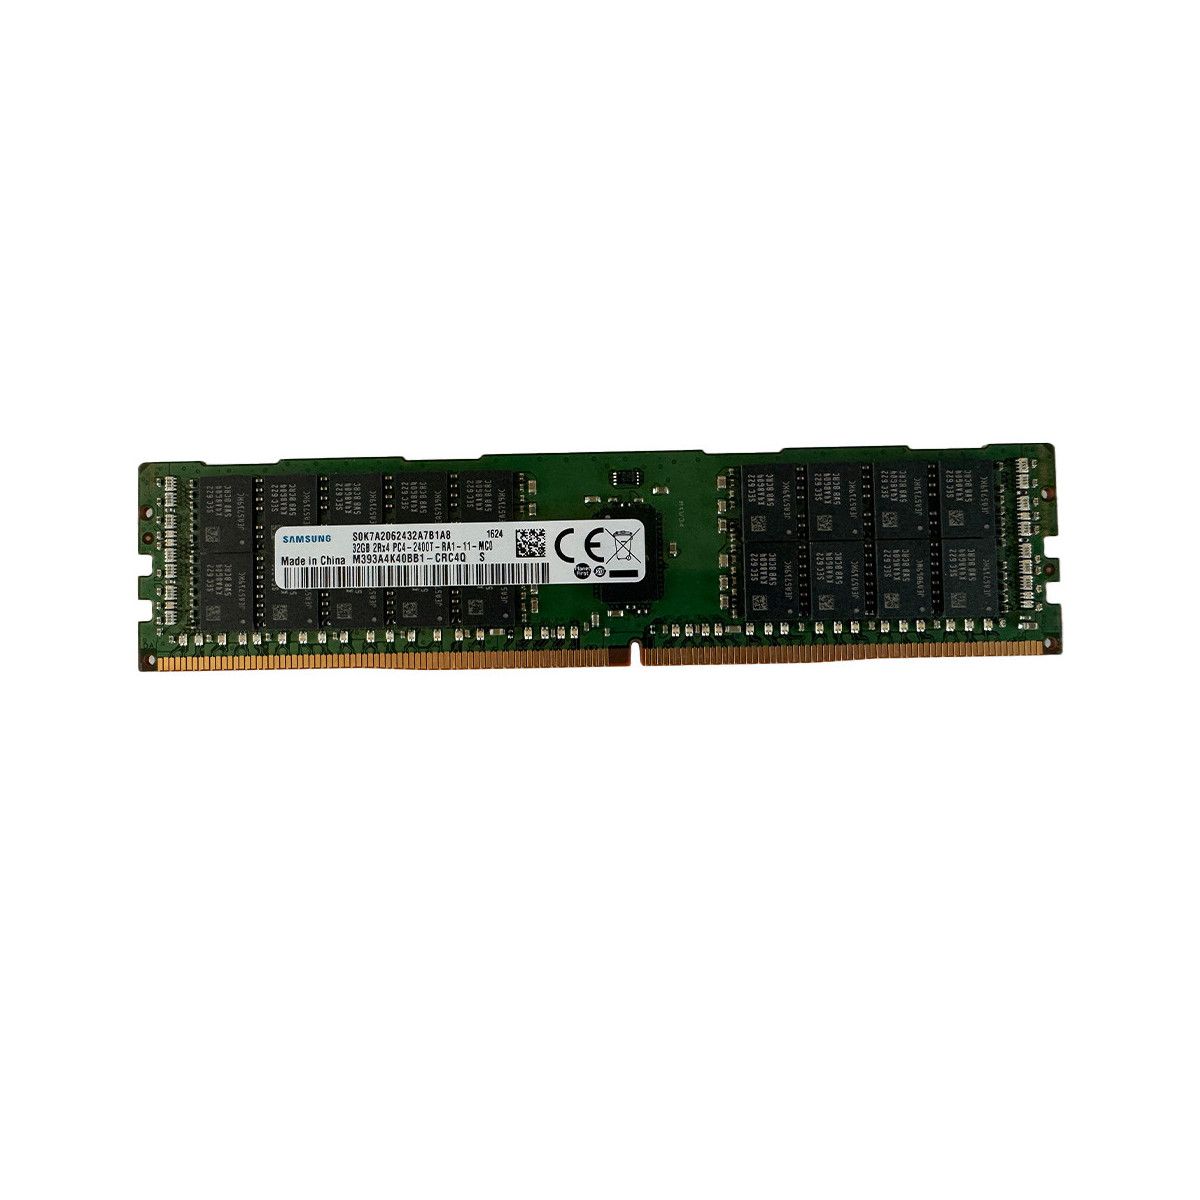 A8868768-MS - Memstar 1x 32GB DDR4-2400 RDIMM PC4-19200T-R - Memorie OEM compatibilă Mem-Star 1 - Memstar 